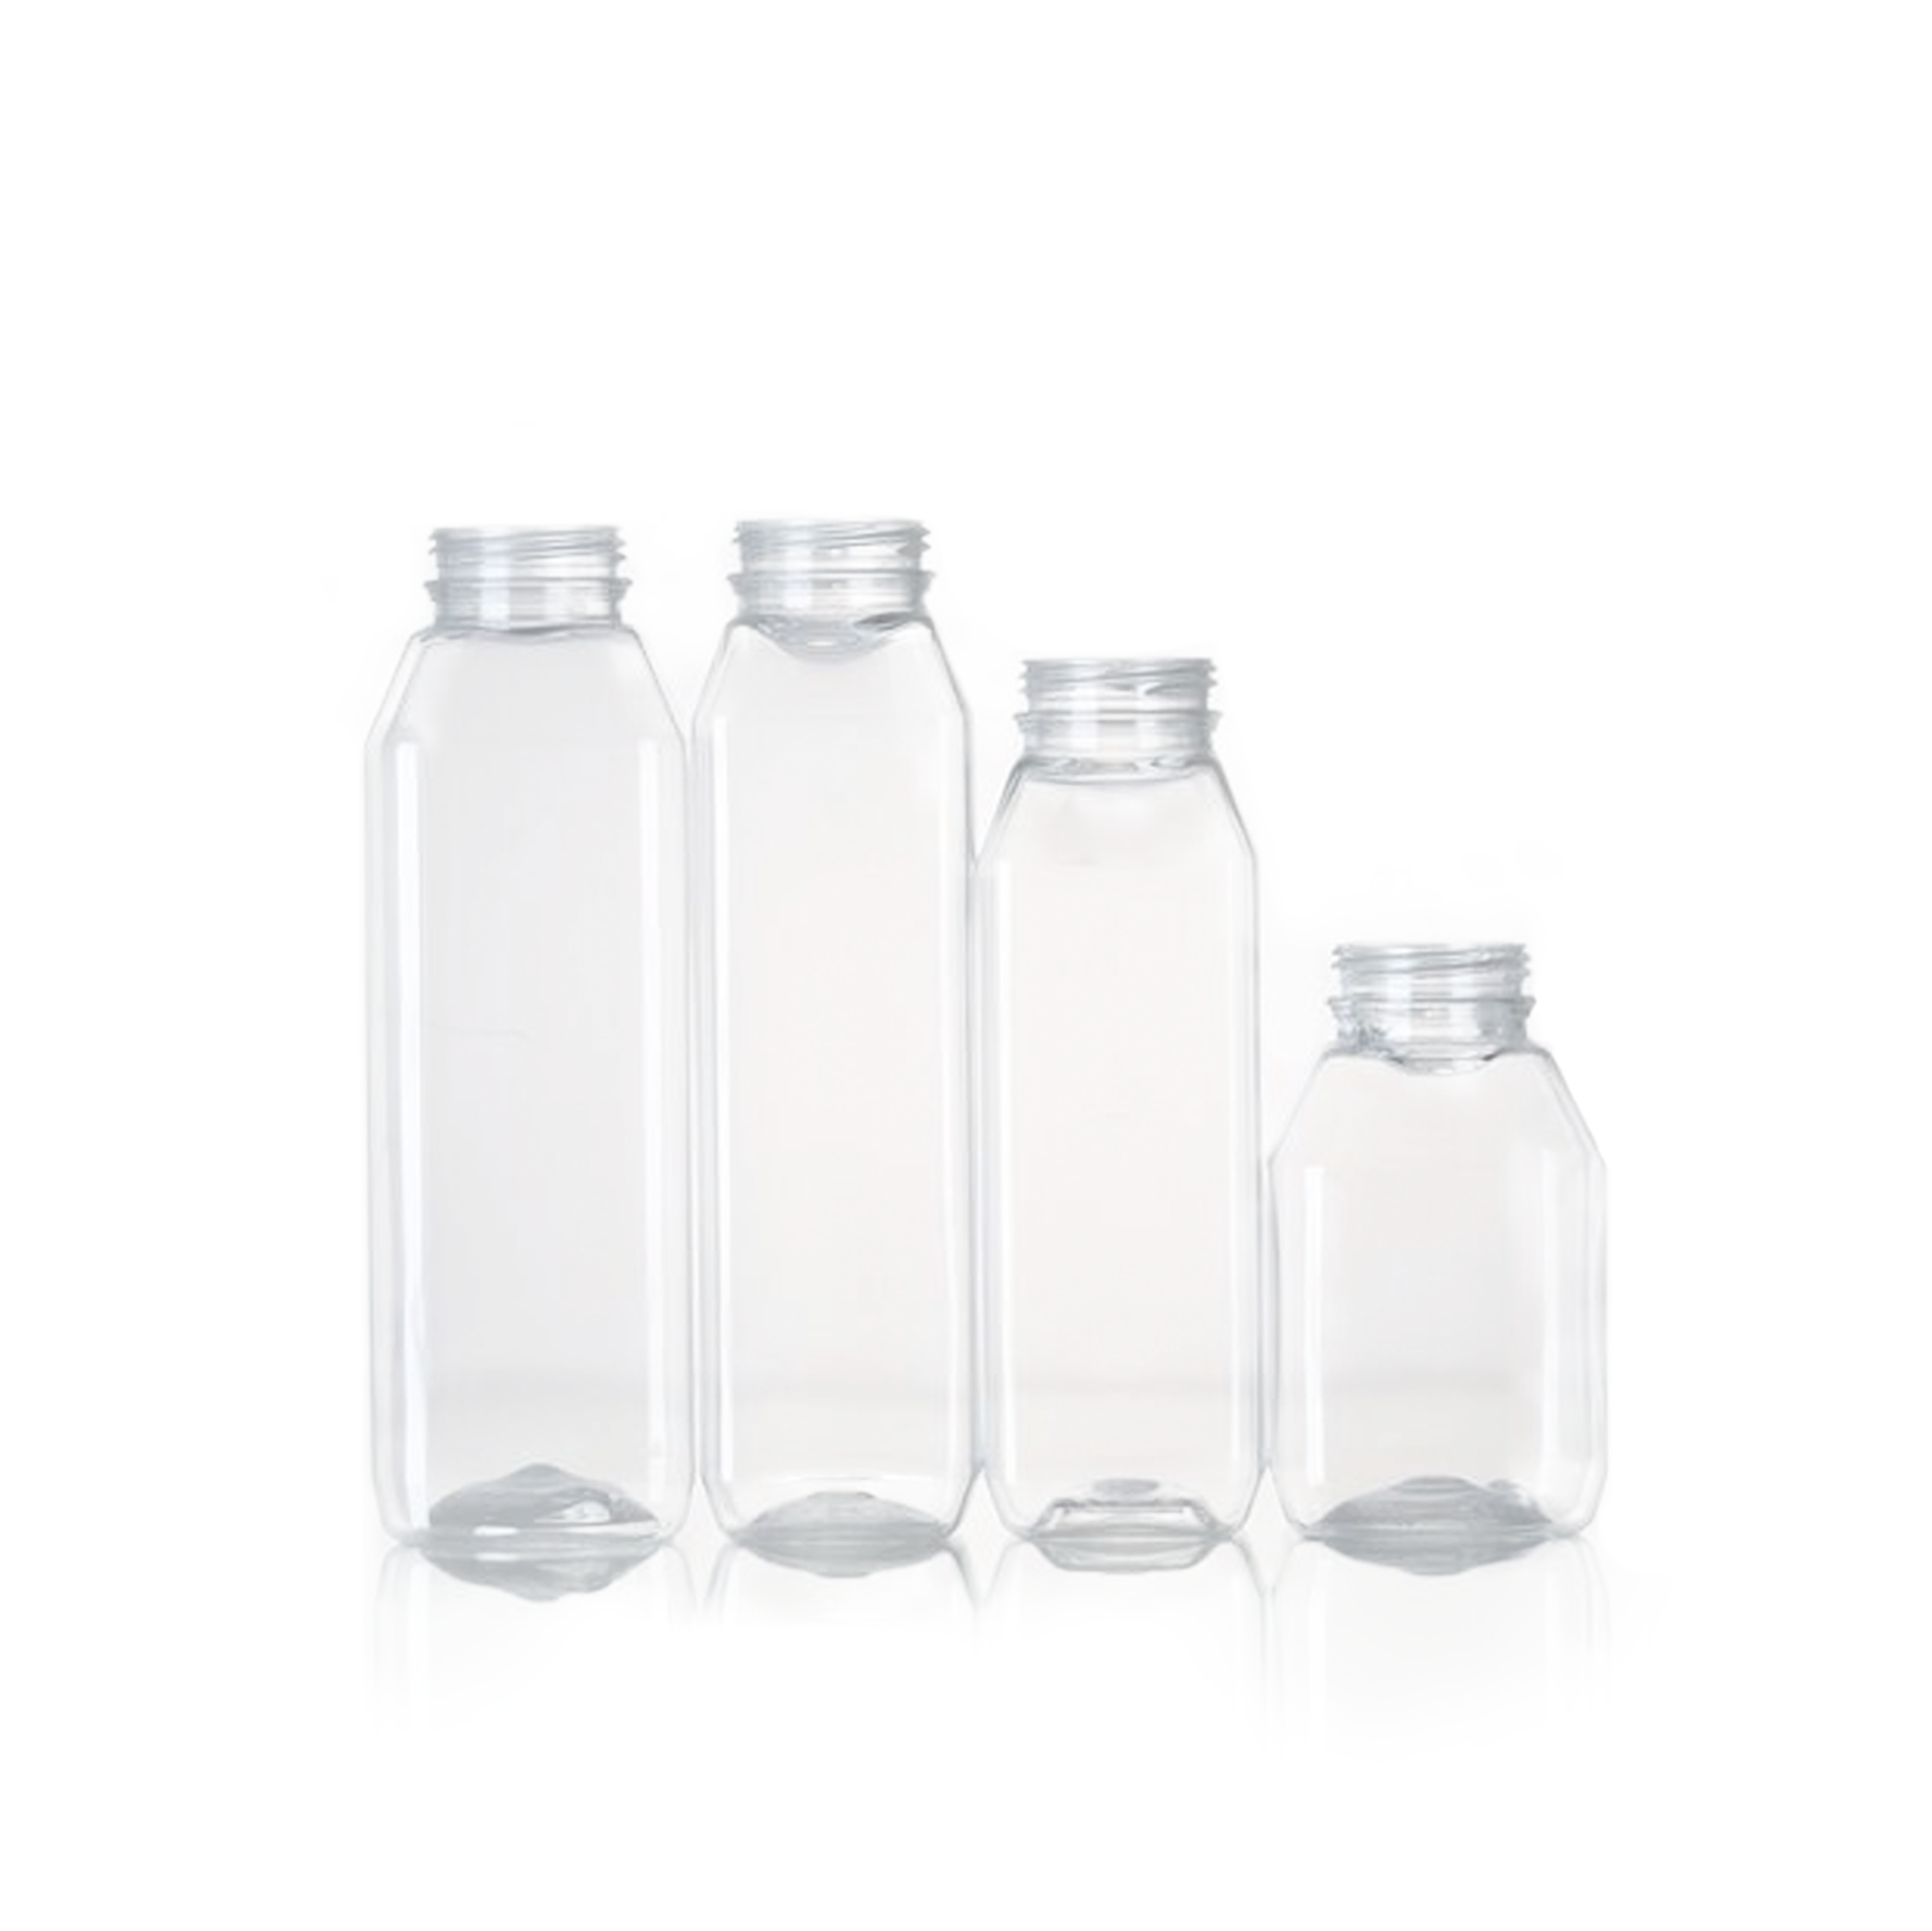 16 oz Plastic Juice Bottles, Square